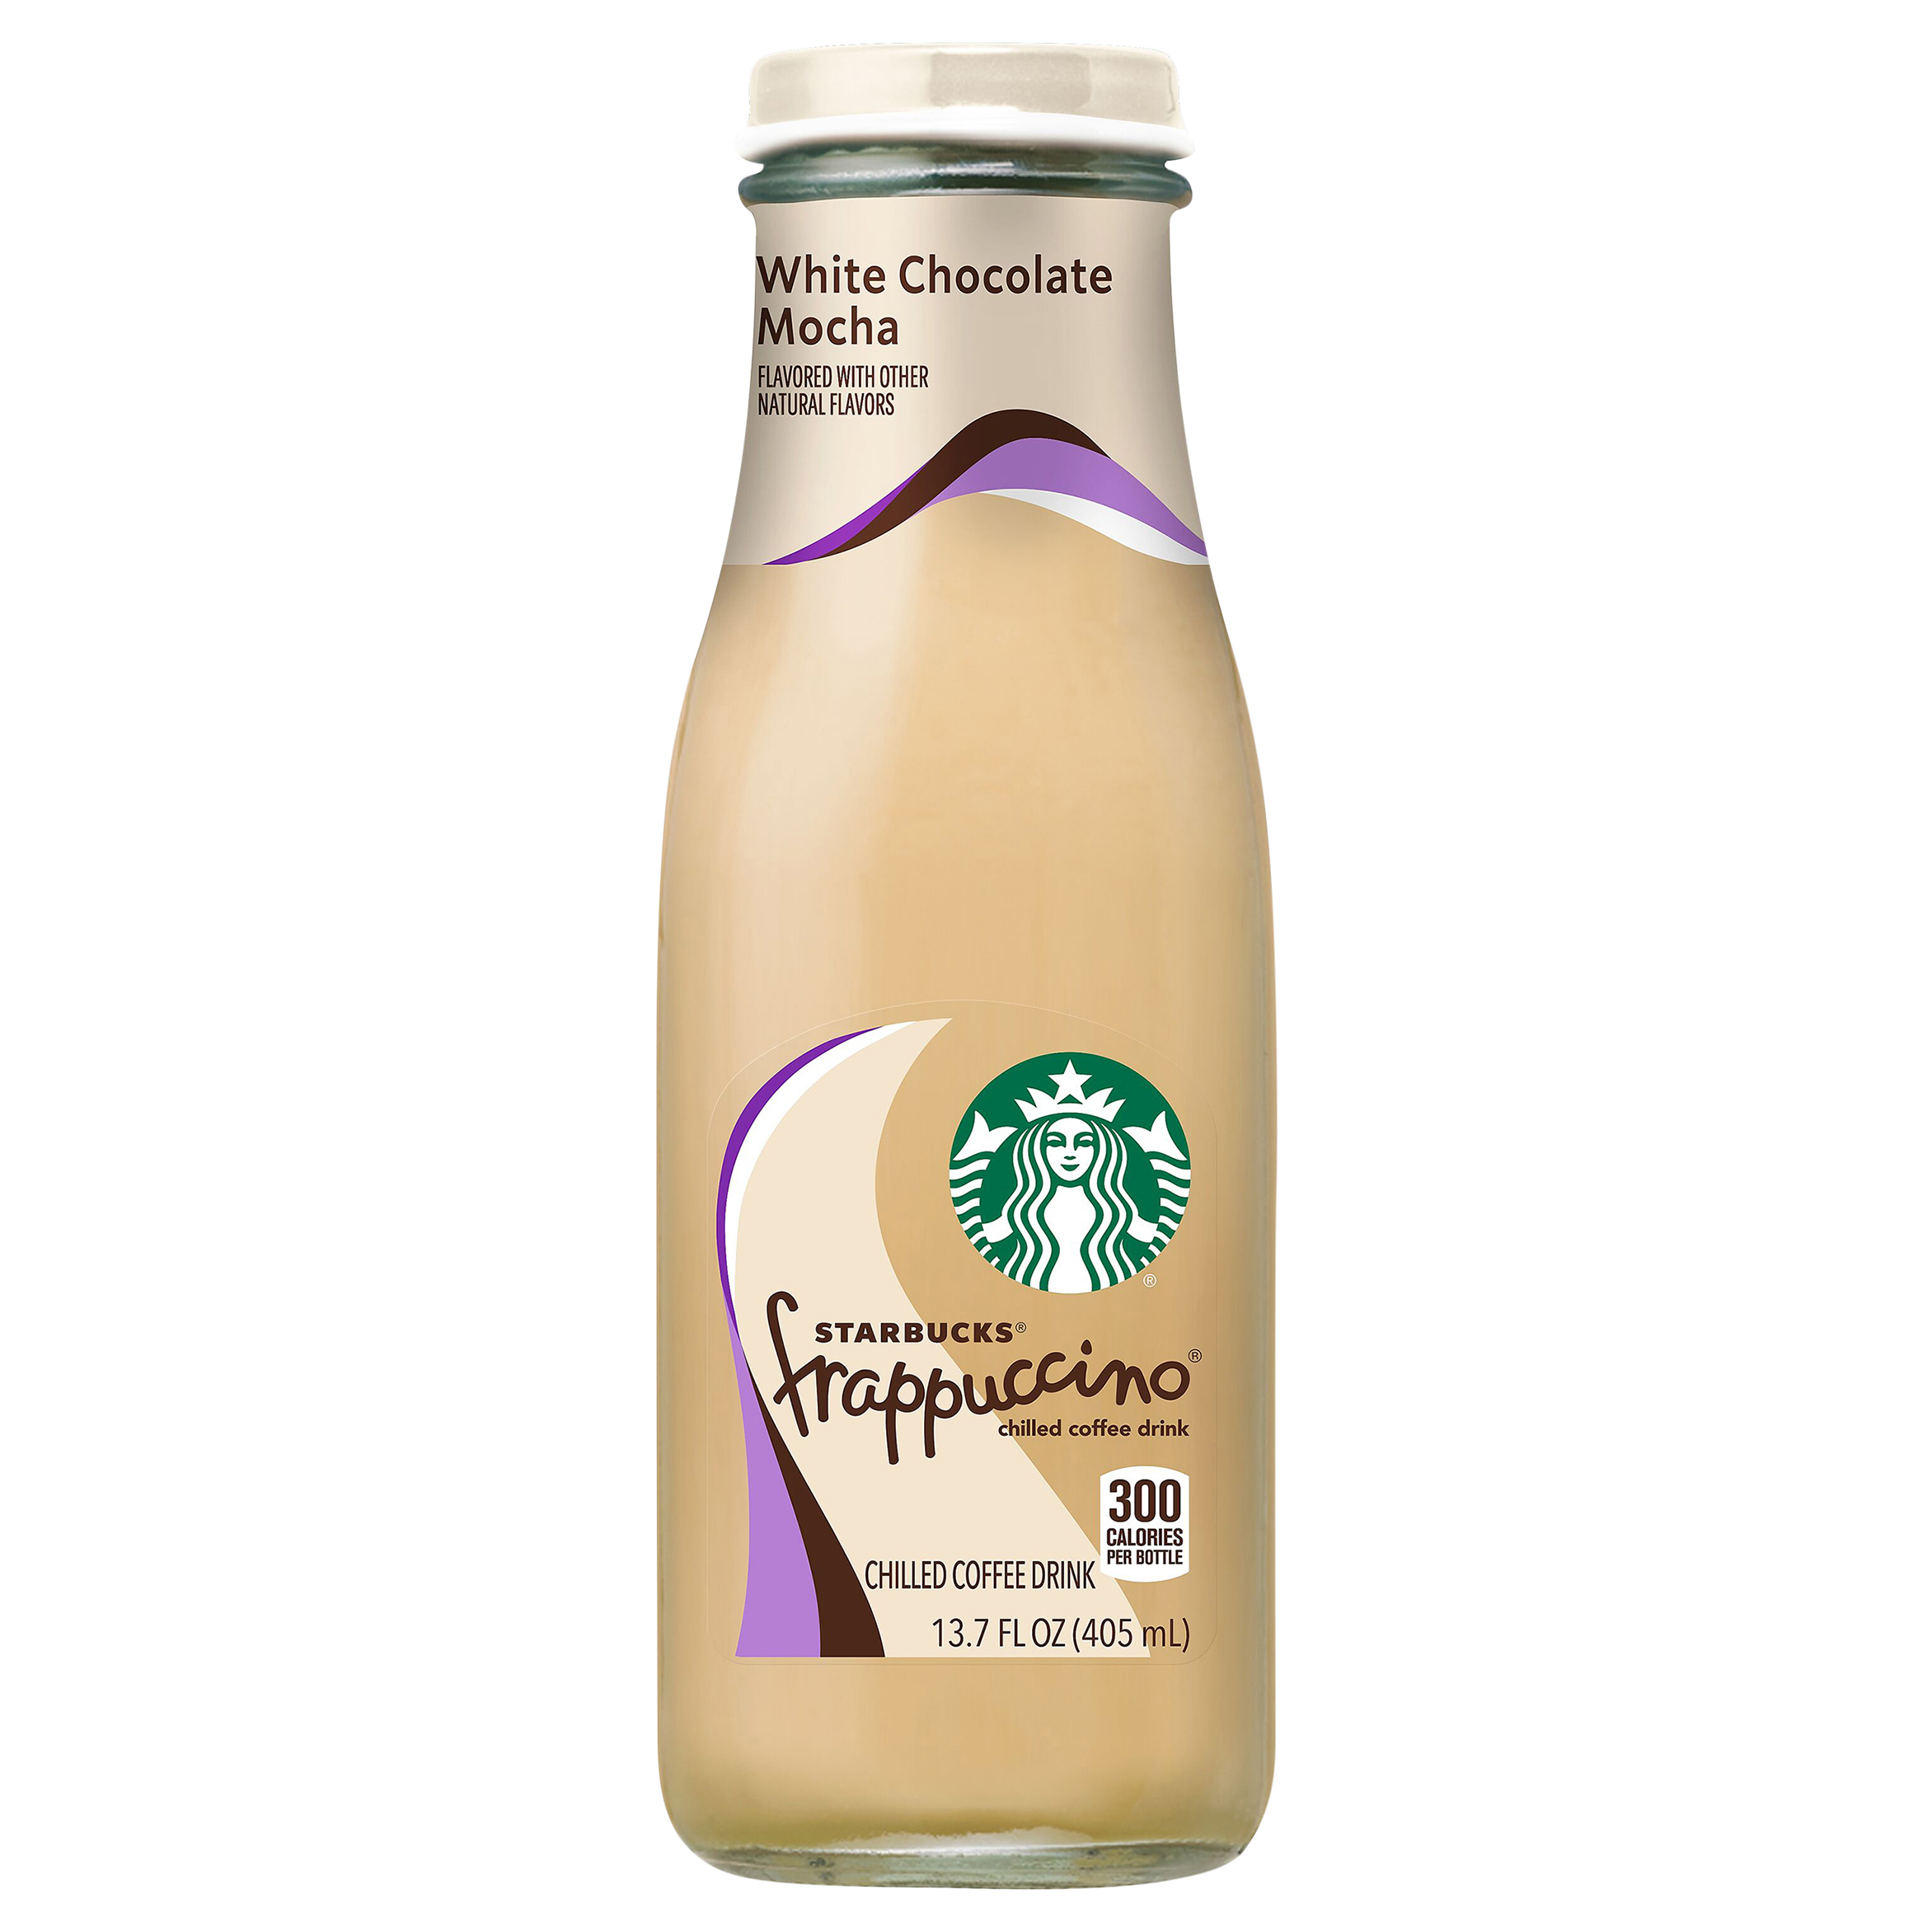 Starbucks Frappuccino Chilled Coffee Drink, Mocha, 13.7 oz Glass Bottle